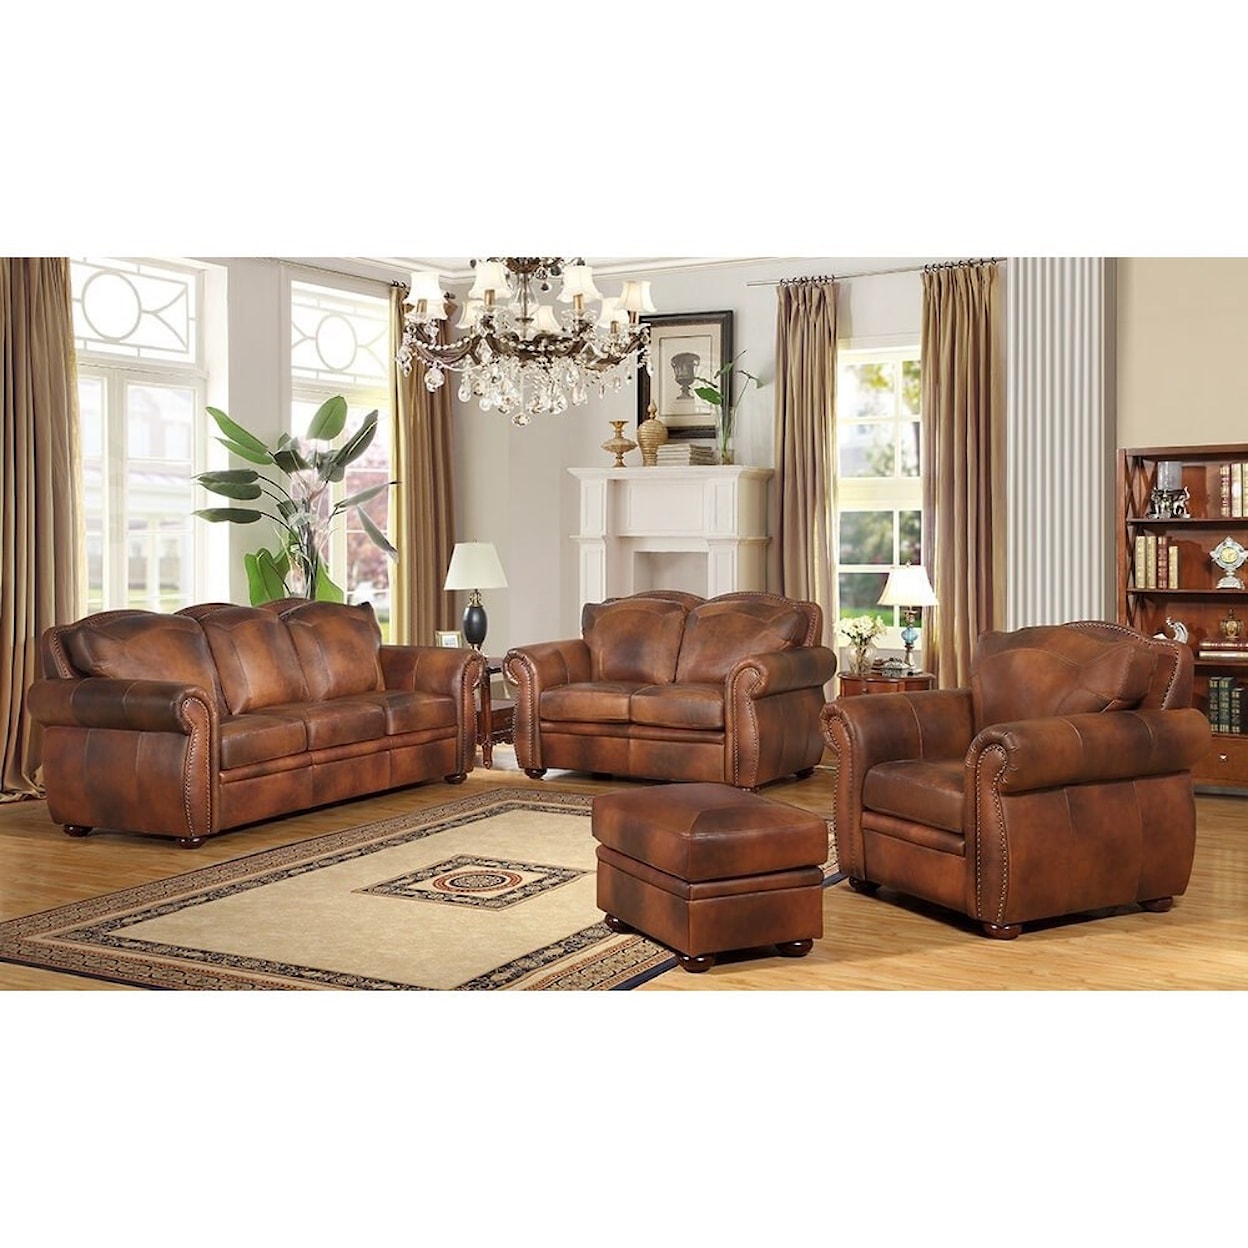 Leather Italia USA Arizona Stationary Living Room Group